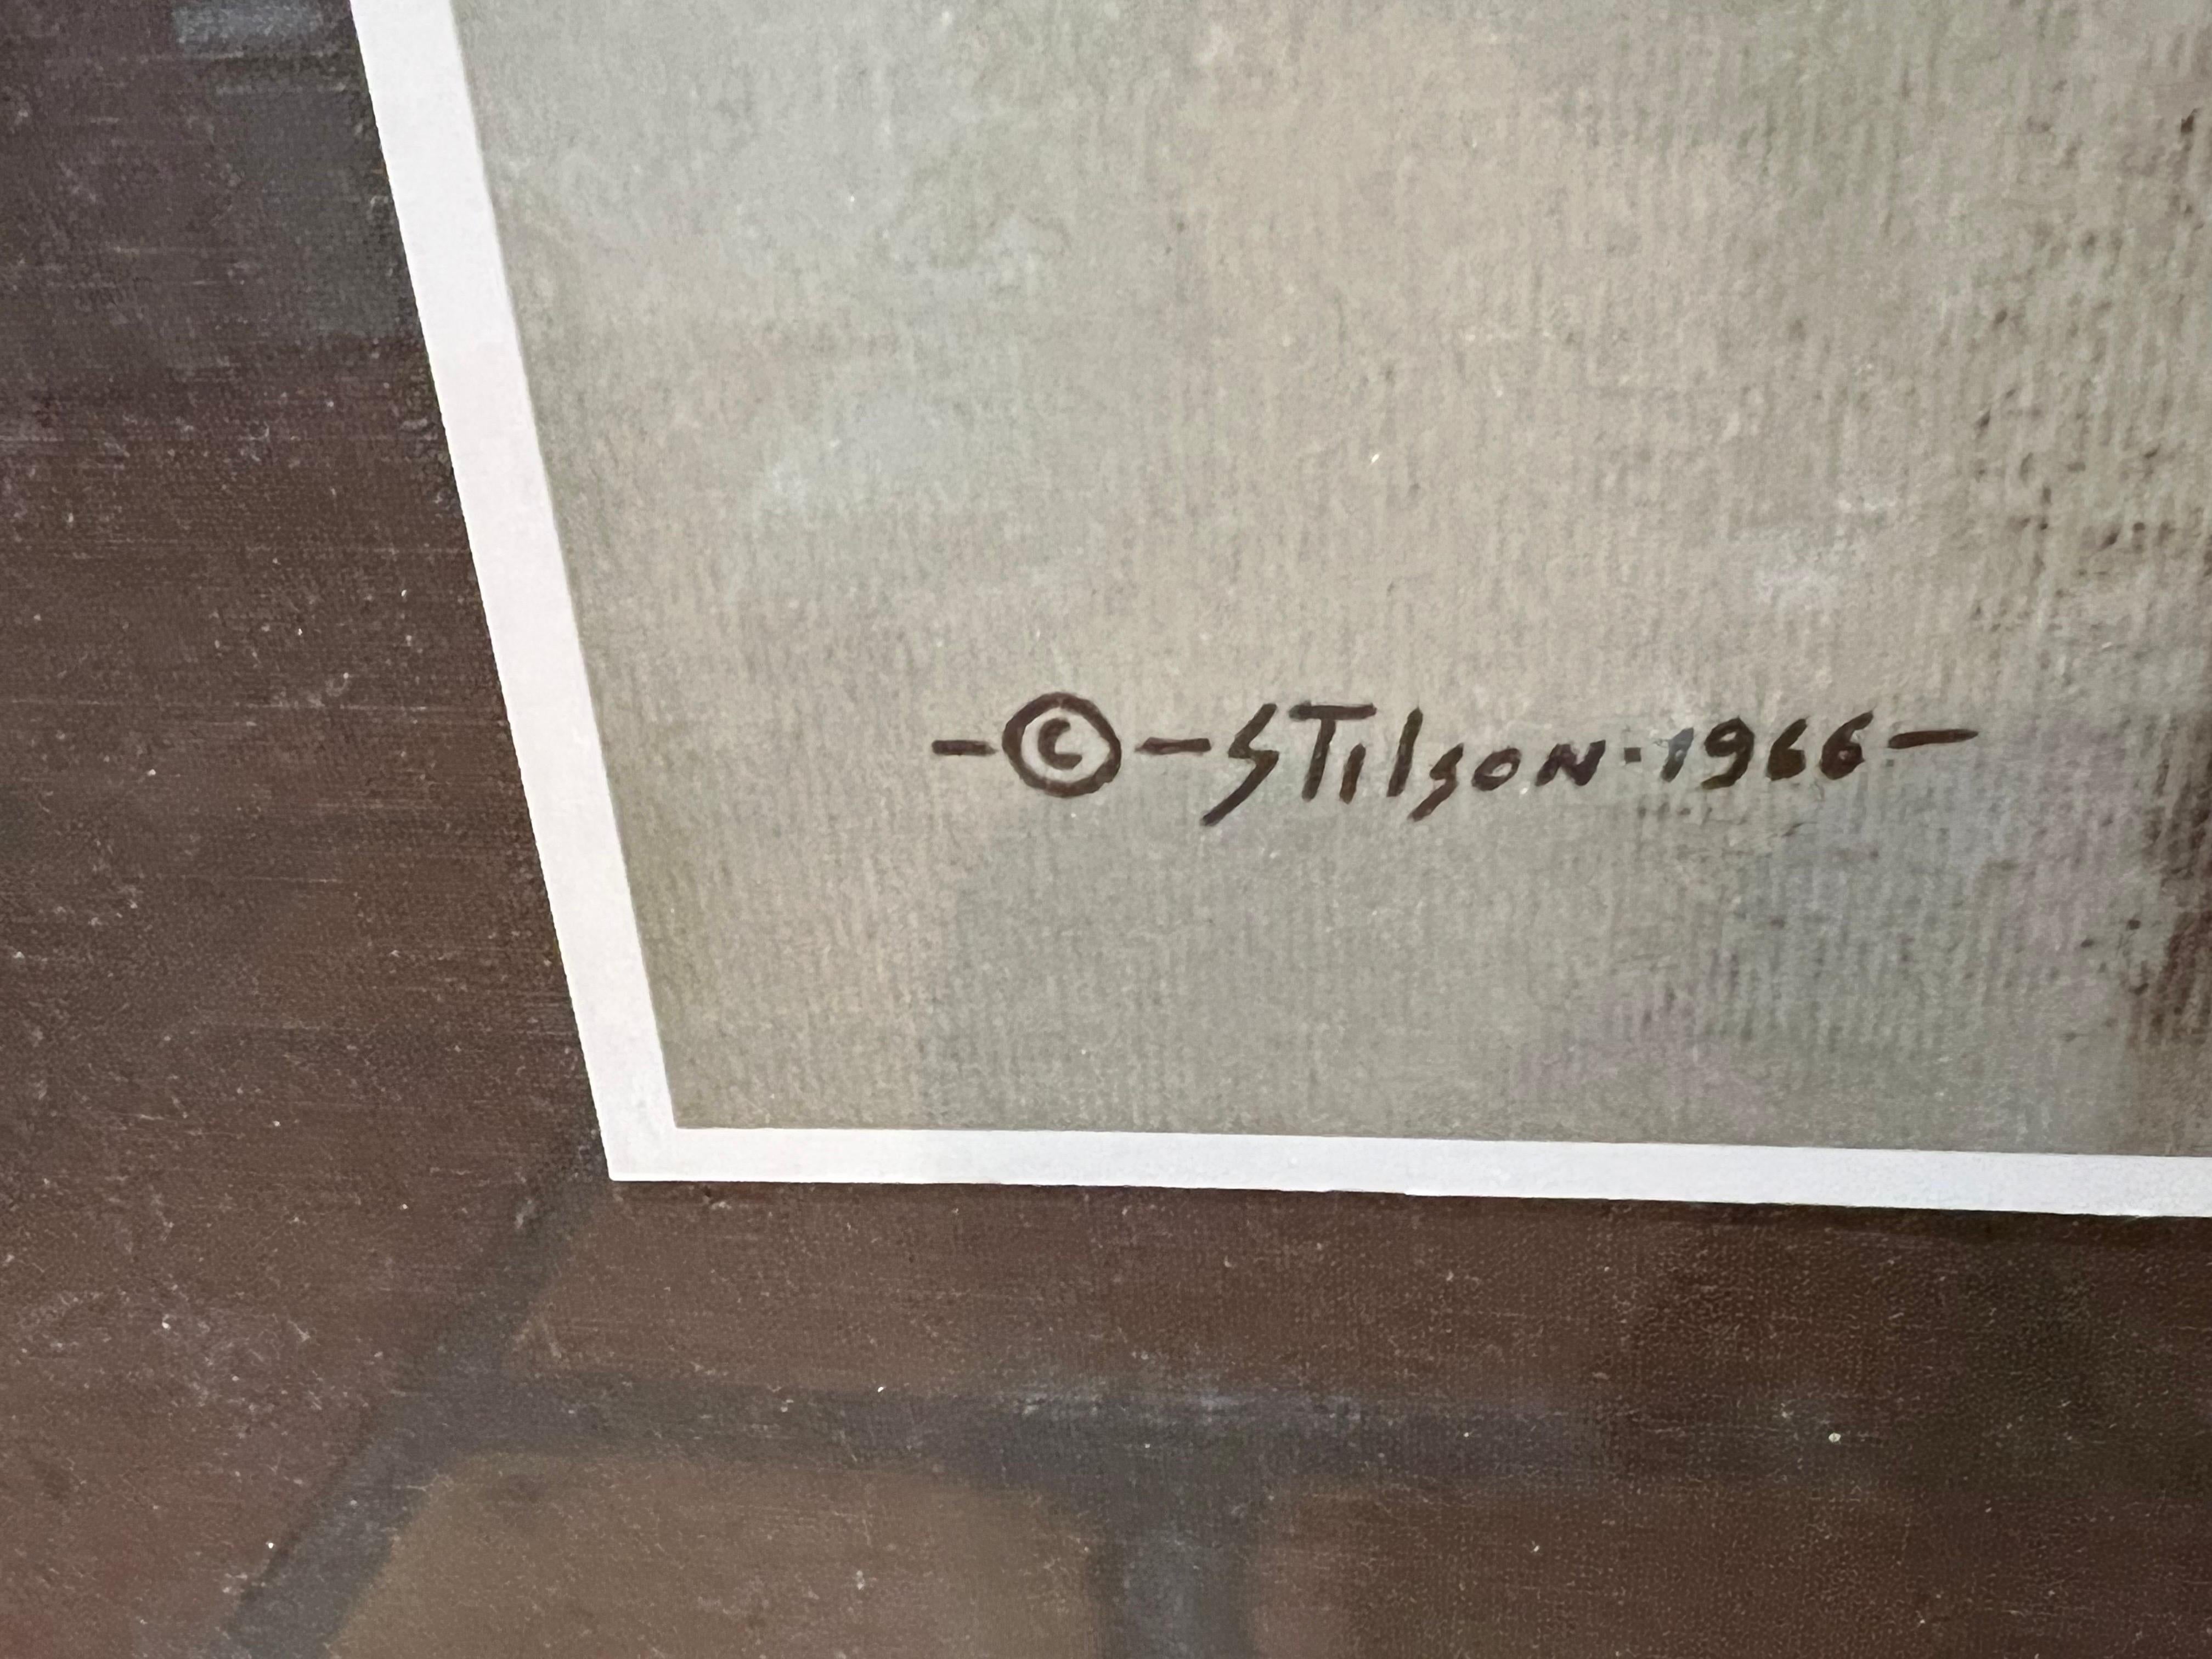 Grand nu signé par Stilson circa 1966 en vente 8